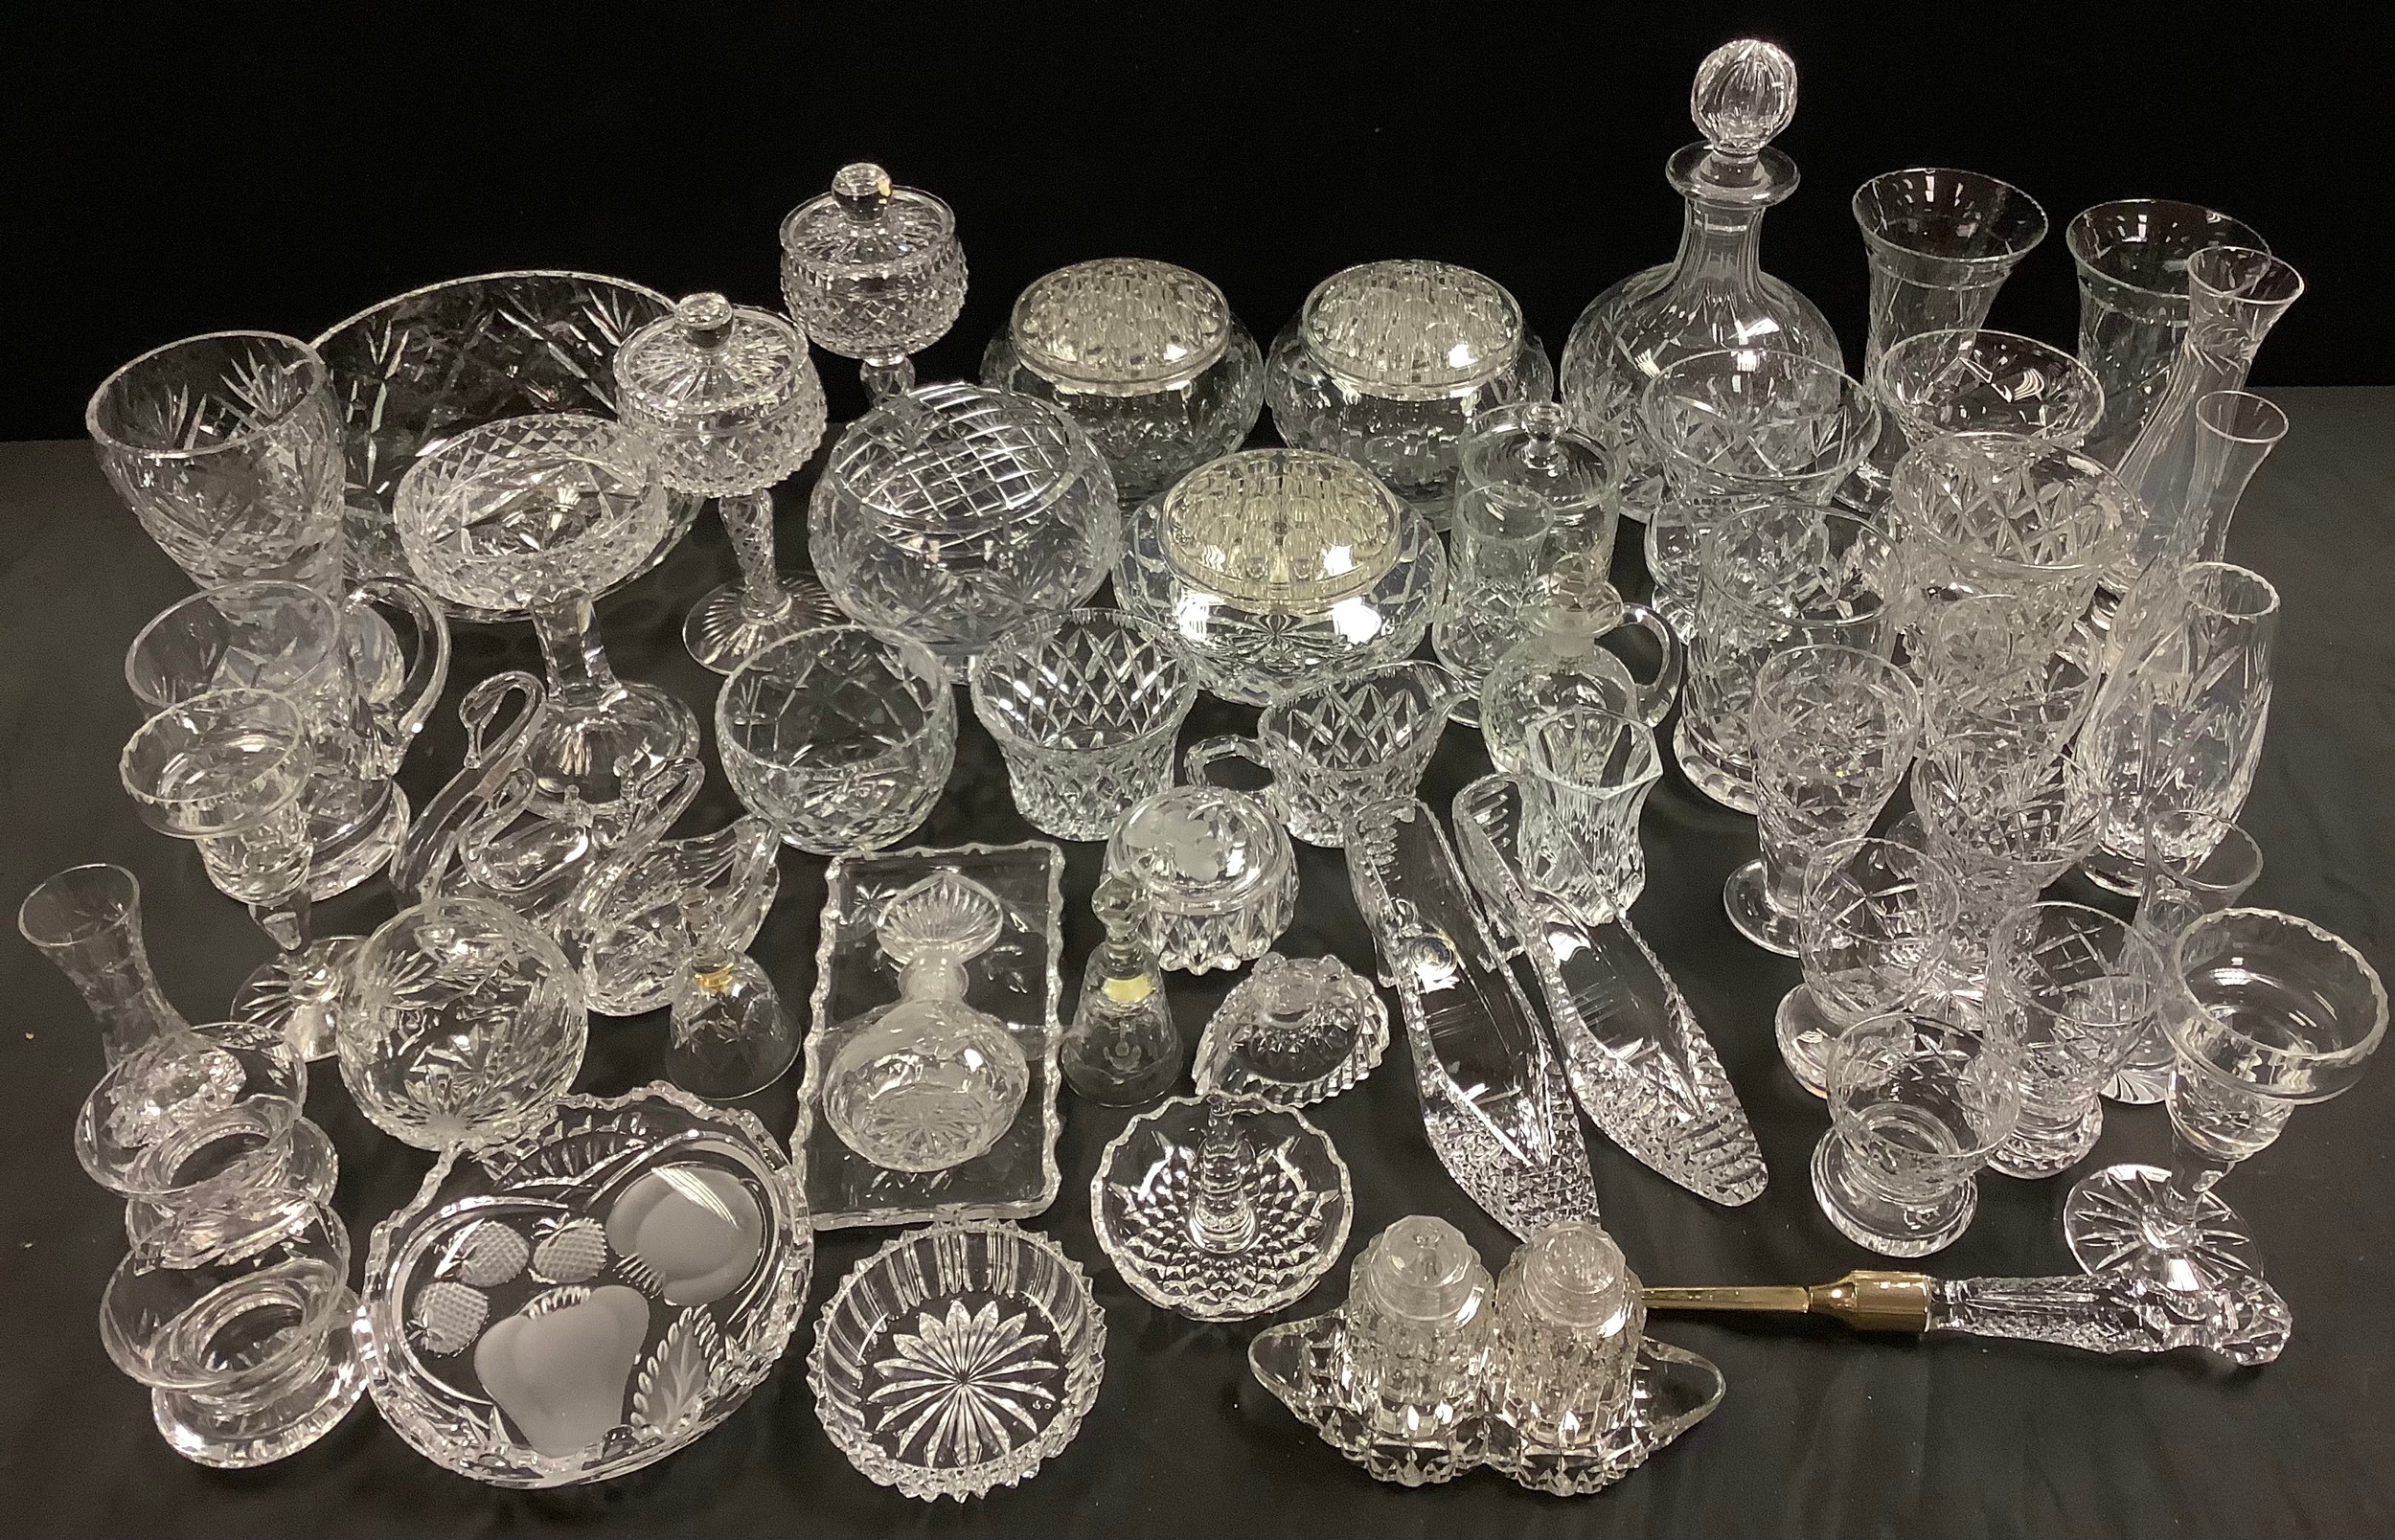 Glassware - cut glass rose bowls, vases, decanter, glasses, trinkets, etc